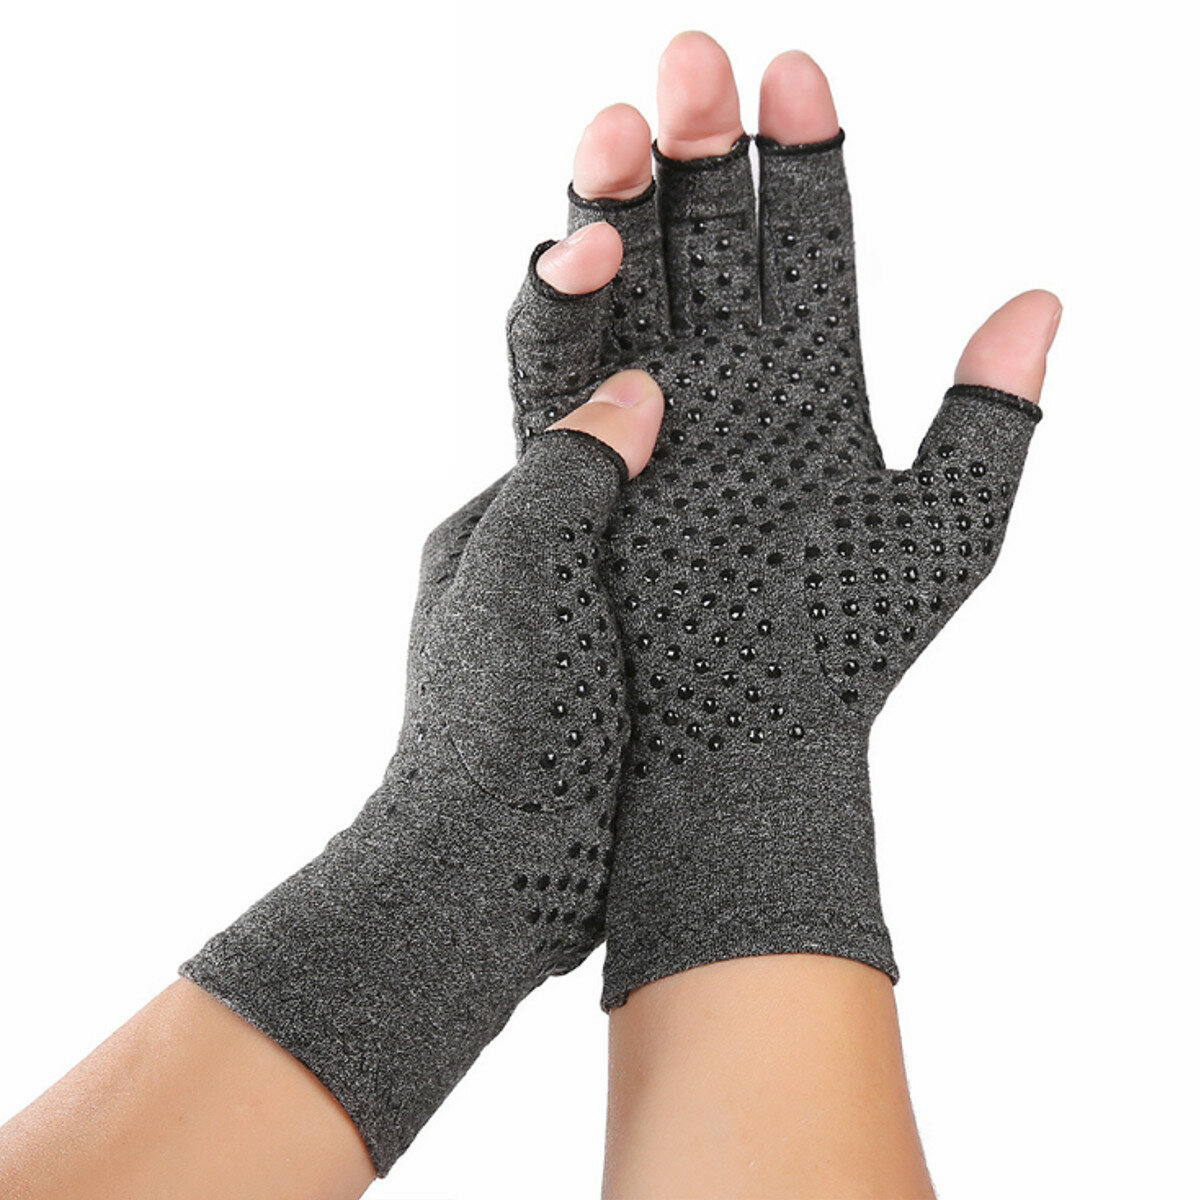 KALOAD 1 Pair Sports Anti-skid Compression Gloves Health Care Half Finger Gloves Arthritis Pain Reli